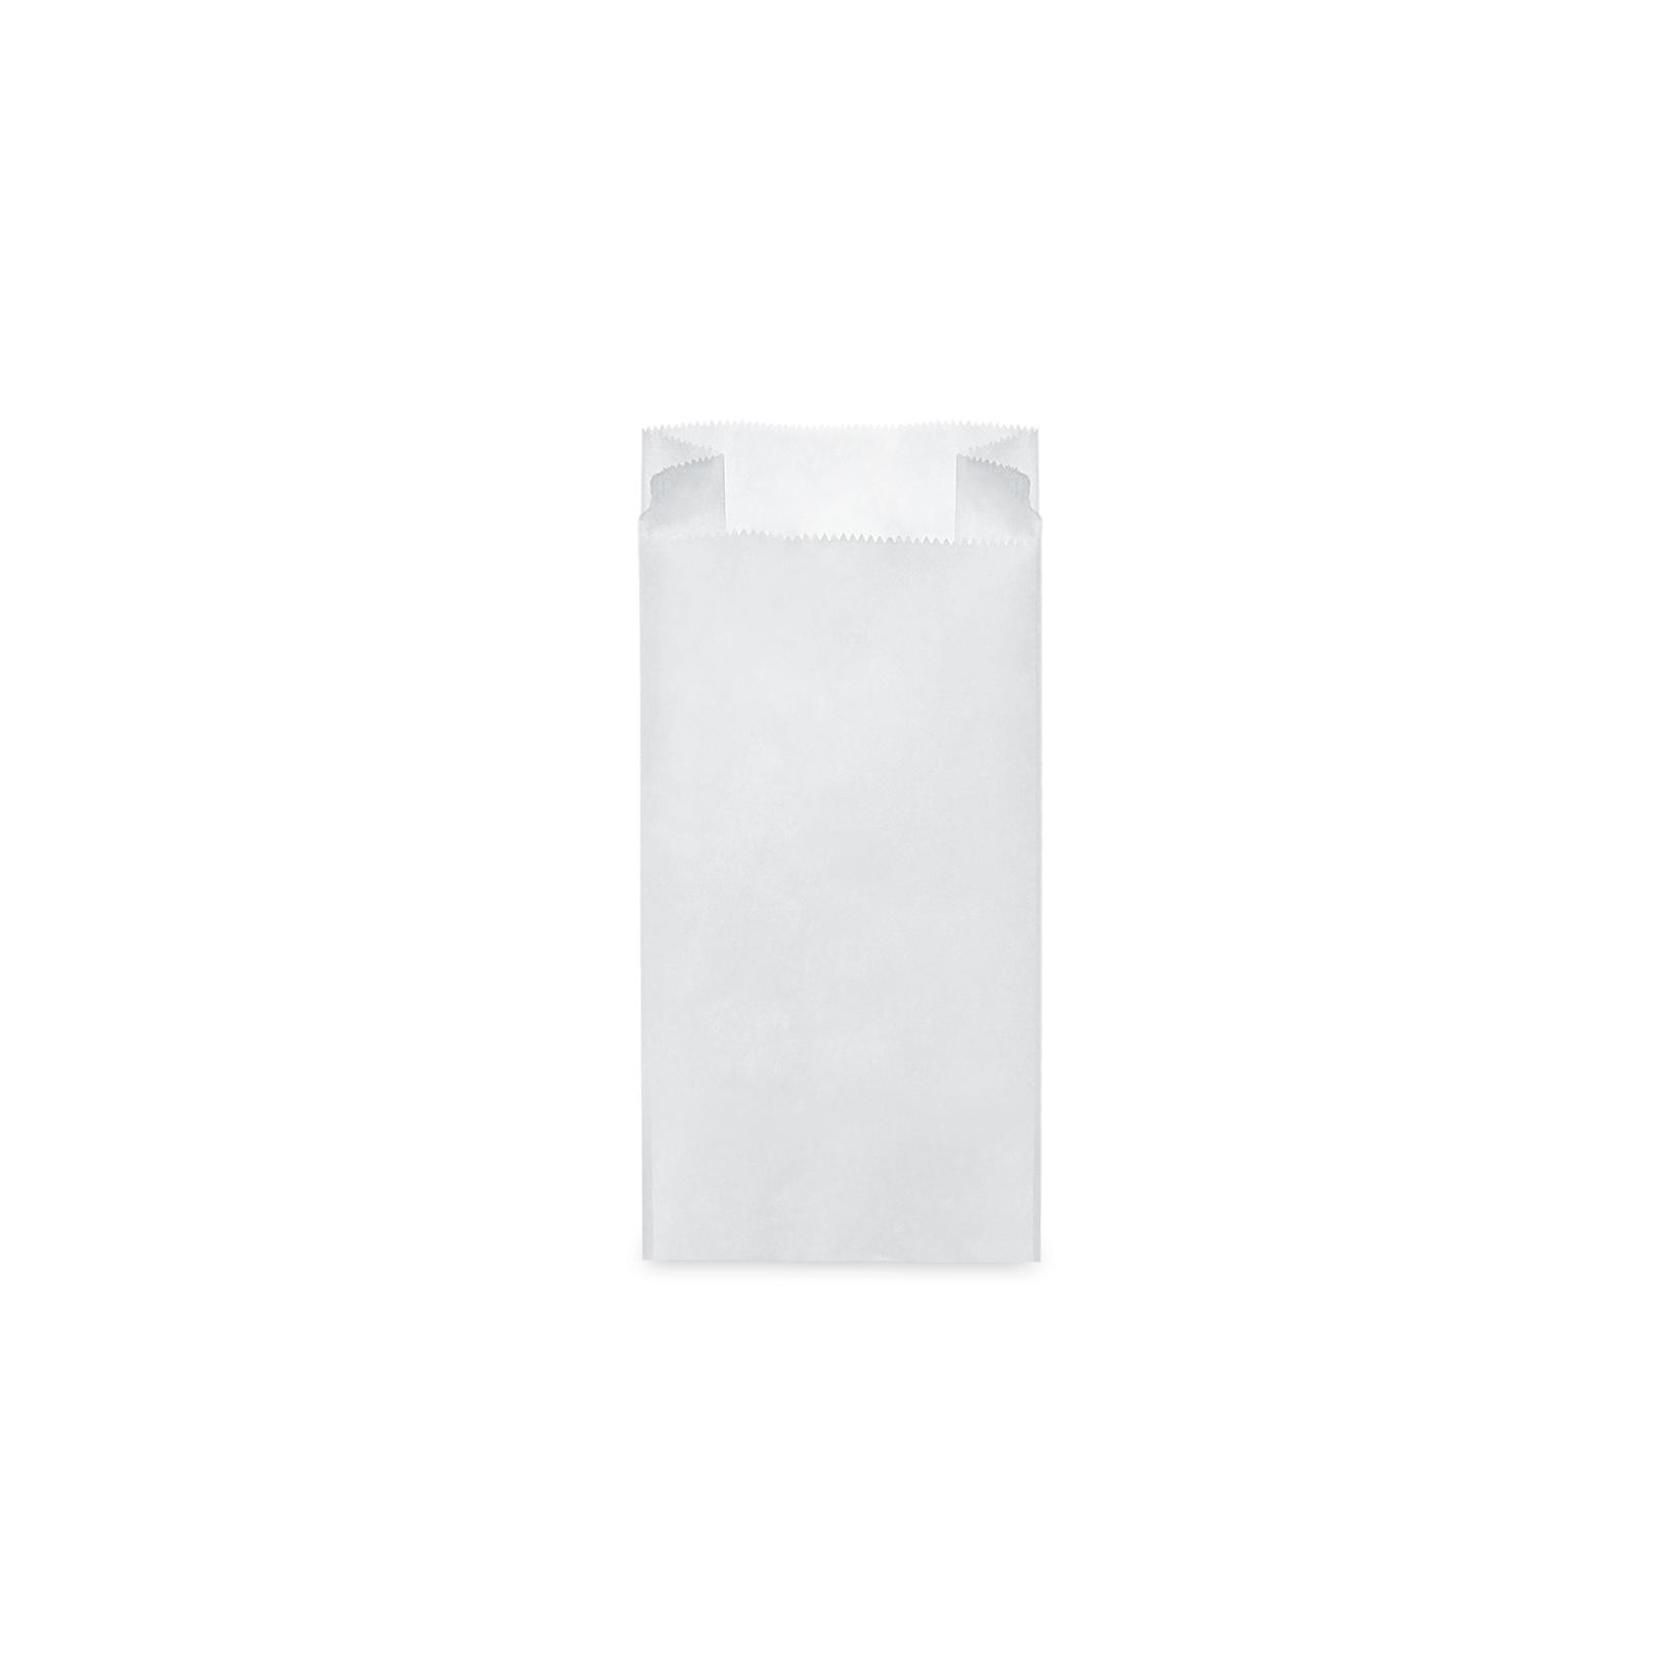 Desiatové pap.vrecká biele 0,5kg /100ks